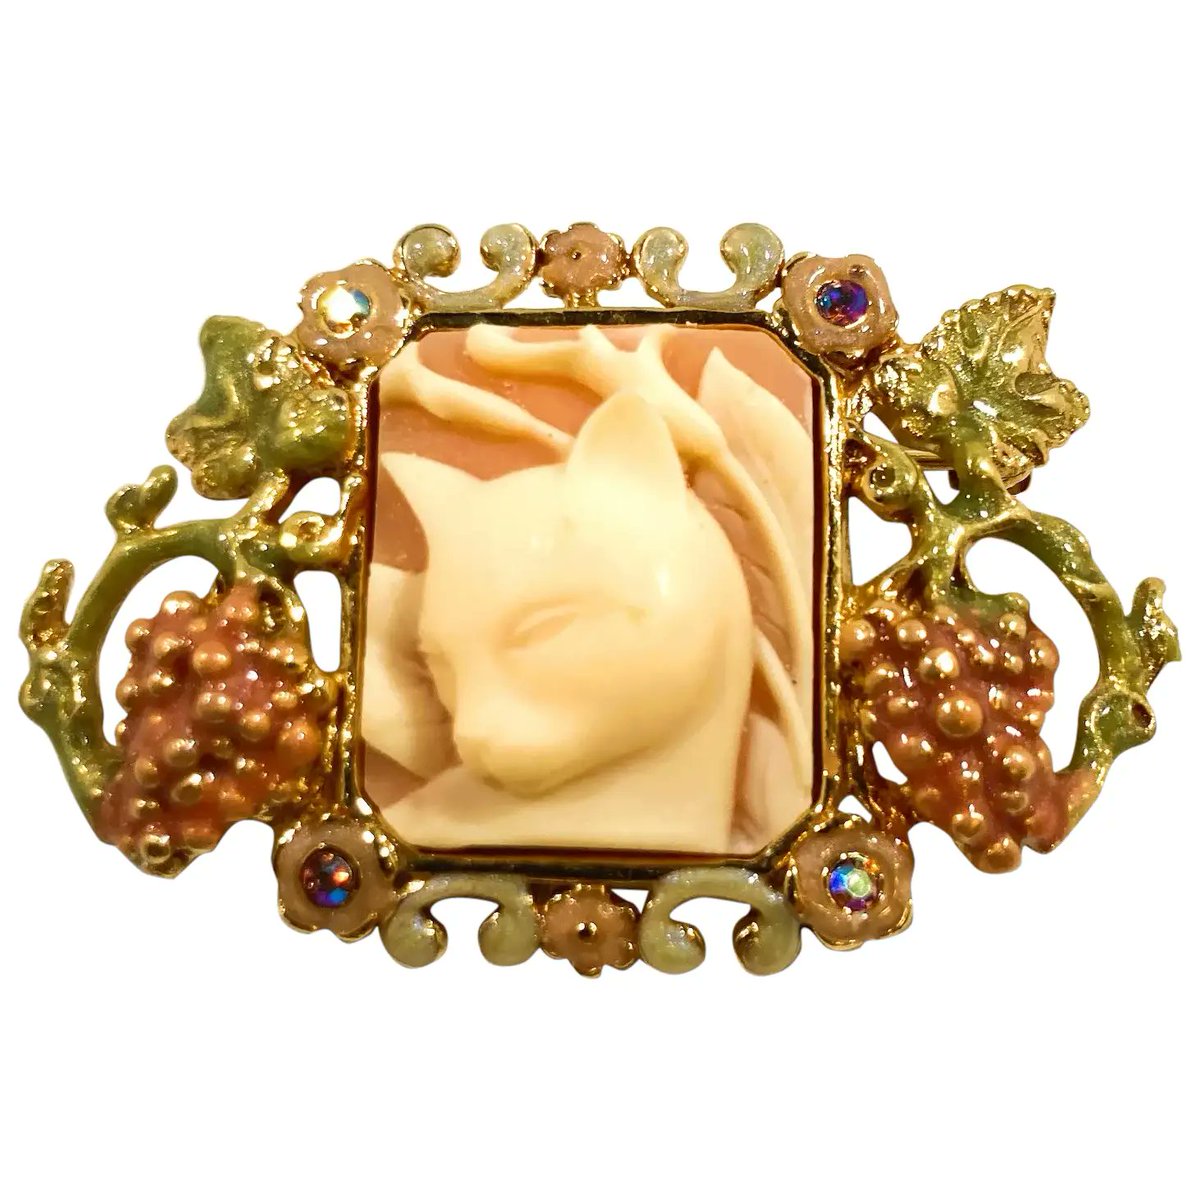 Kirks Folly Cat Vineyard Grapes Brooch Mint in Original Box
#rubylane #vintage #jewelry #brooch #designer #hautecouture #giftideas #jewelryaddict #cat #vintagebeginshere #fashionista #diva #glam 
rubylane.com/item/136230-E1…